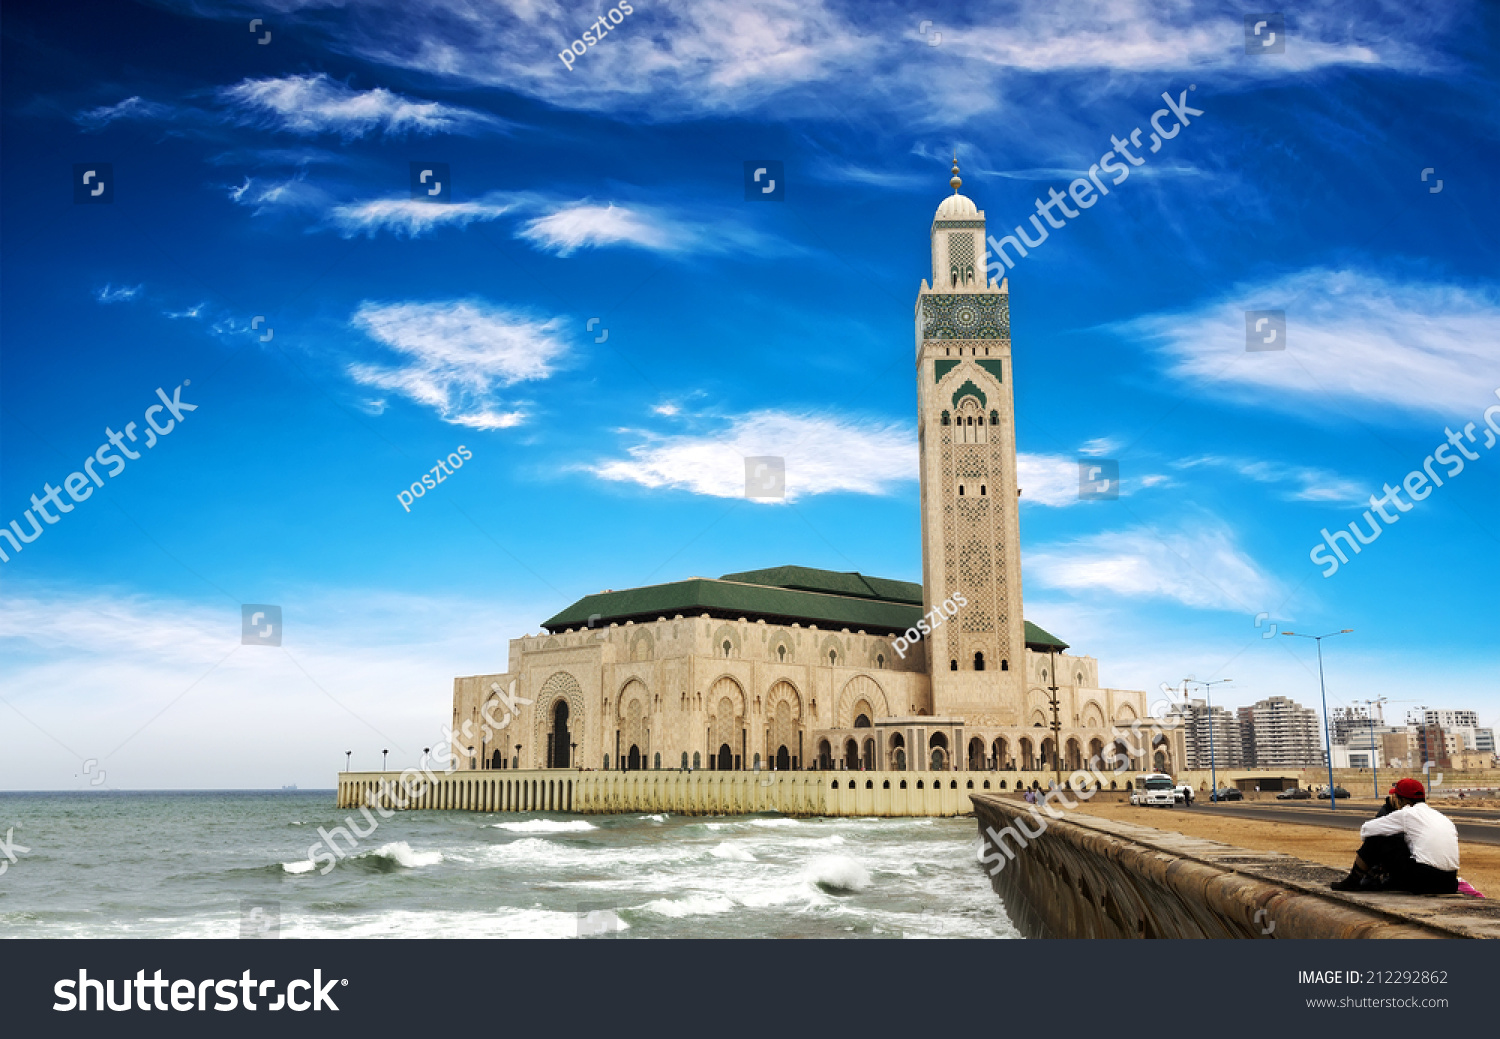 The Hassan II Mosque in Casablanca, Morocco #212292862